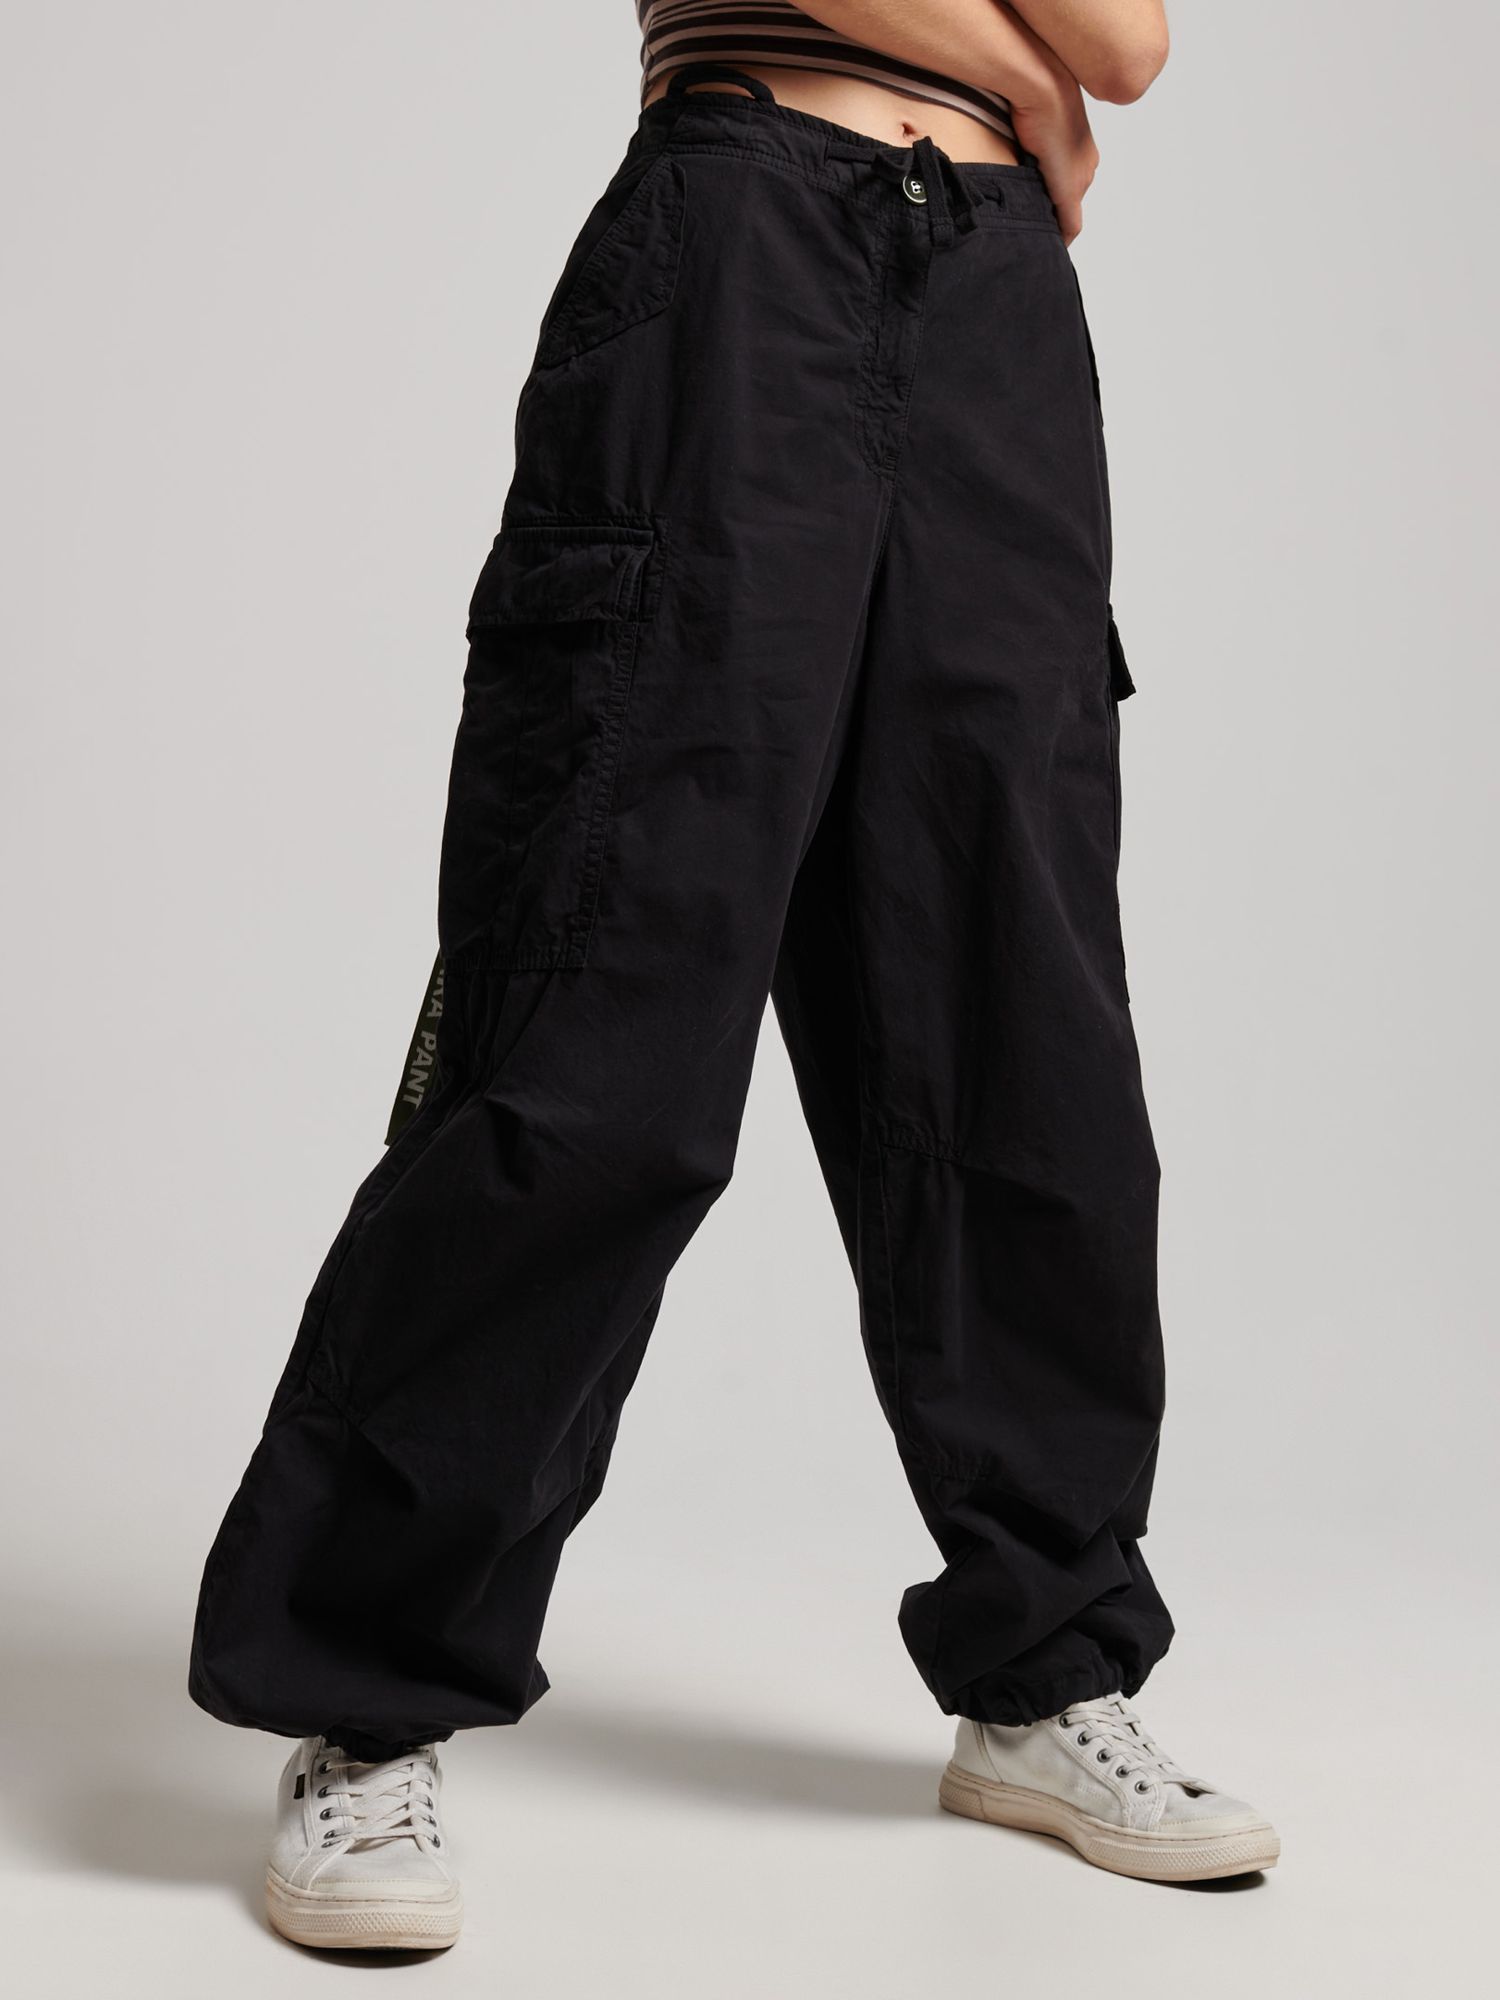 Superdry Baggy Parachute Pants, Black at John Lewis & Partners